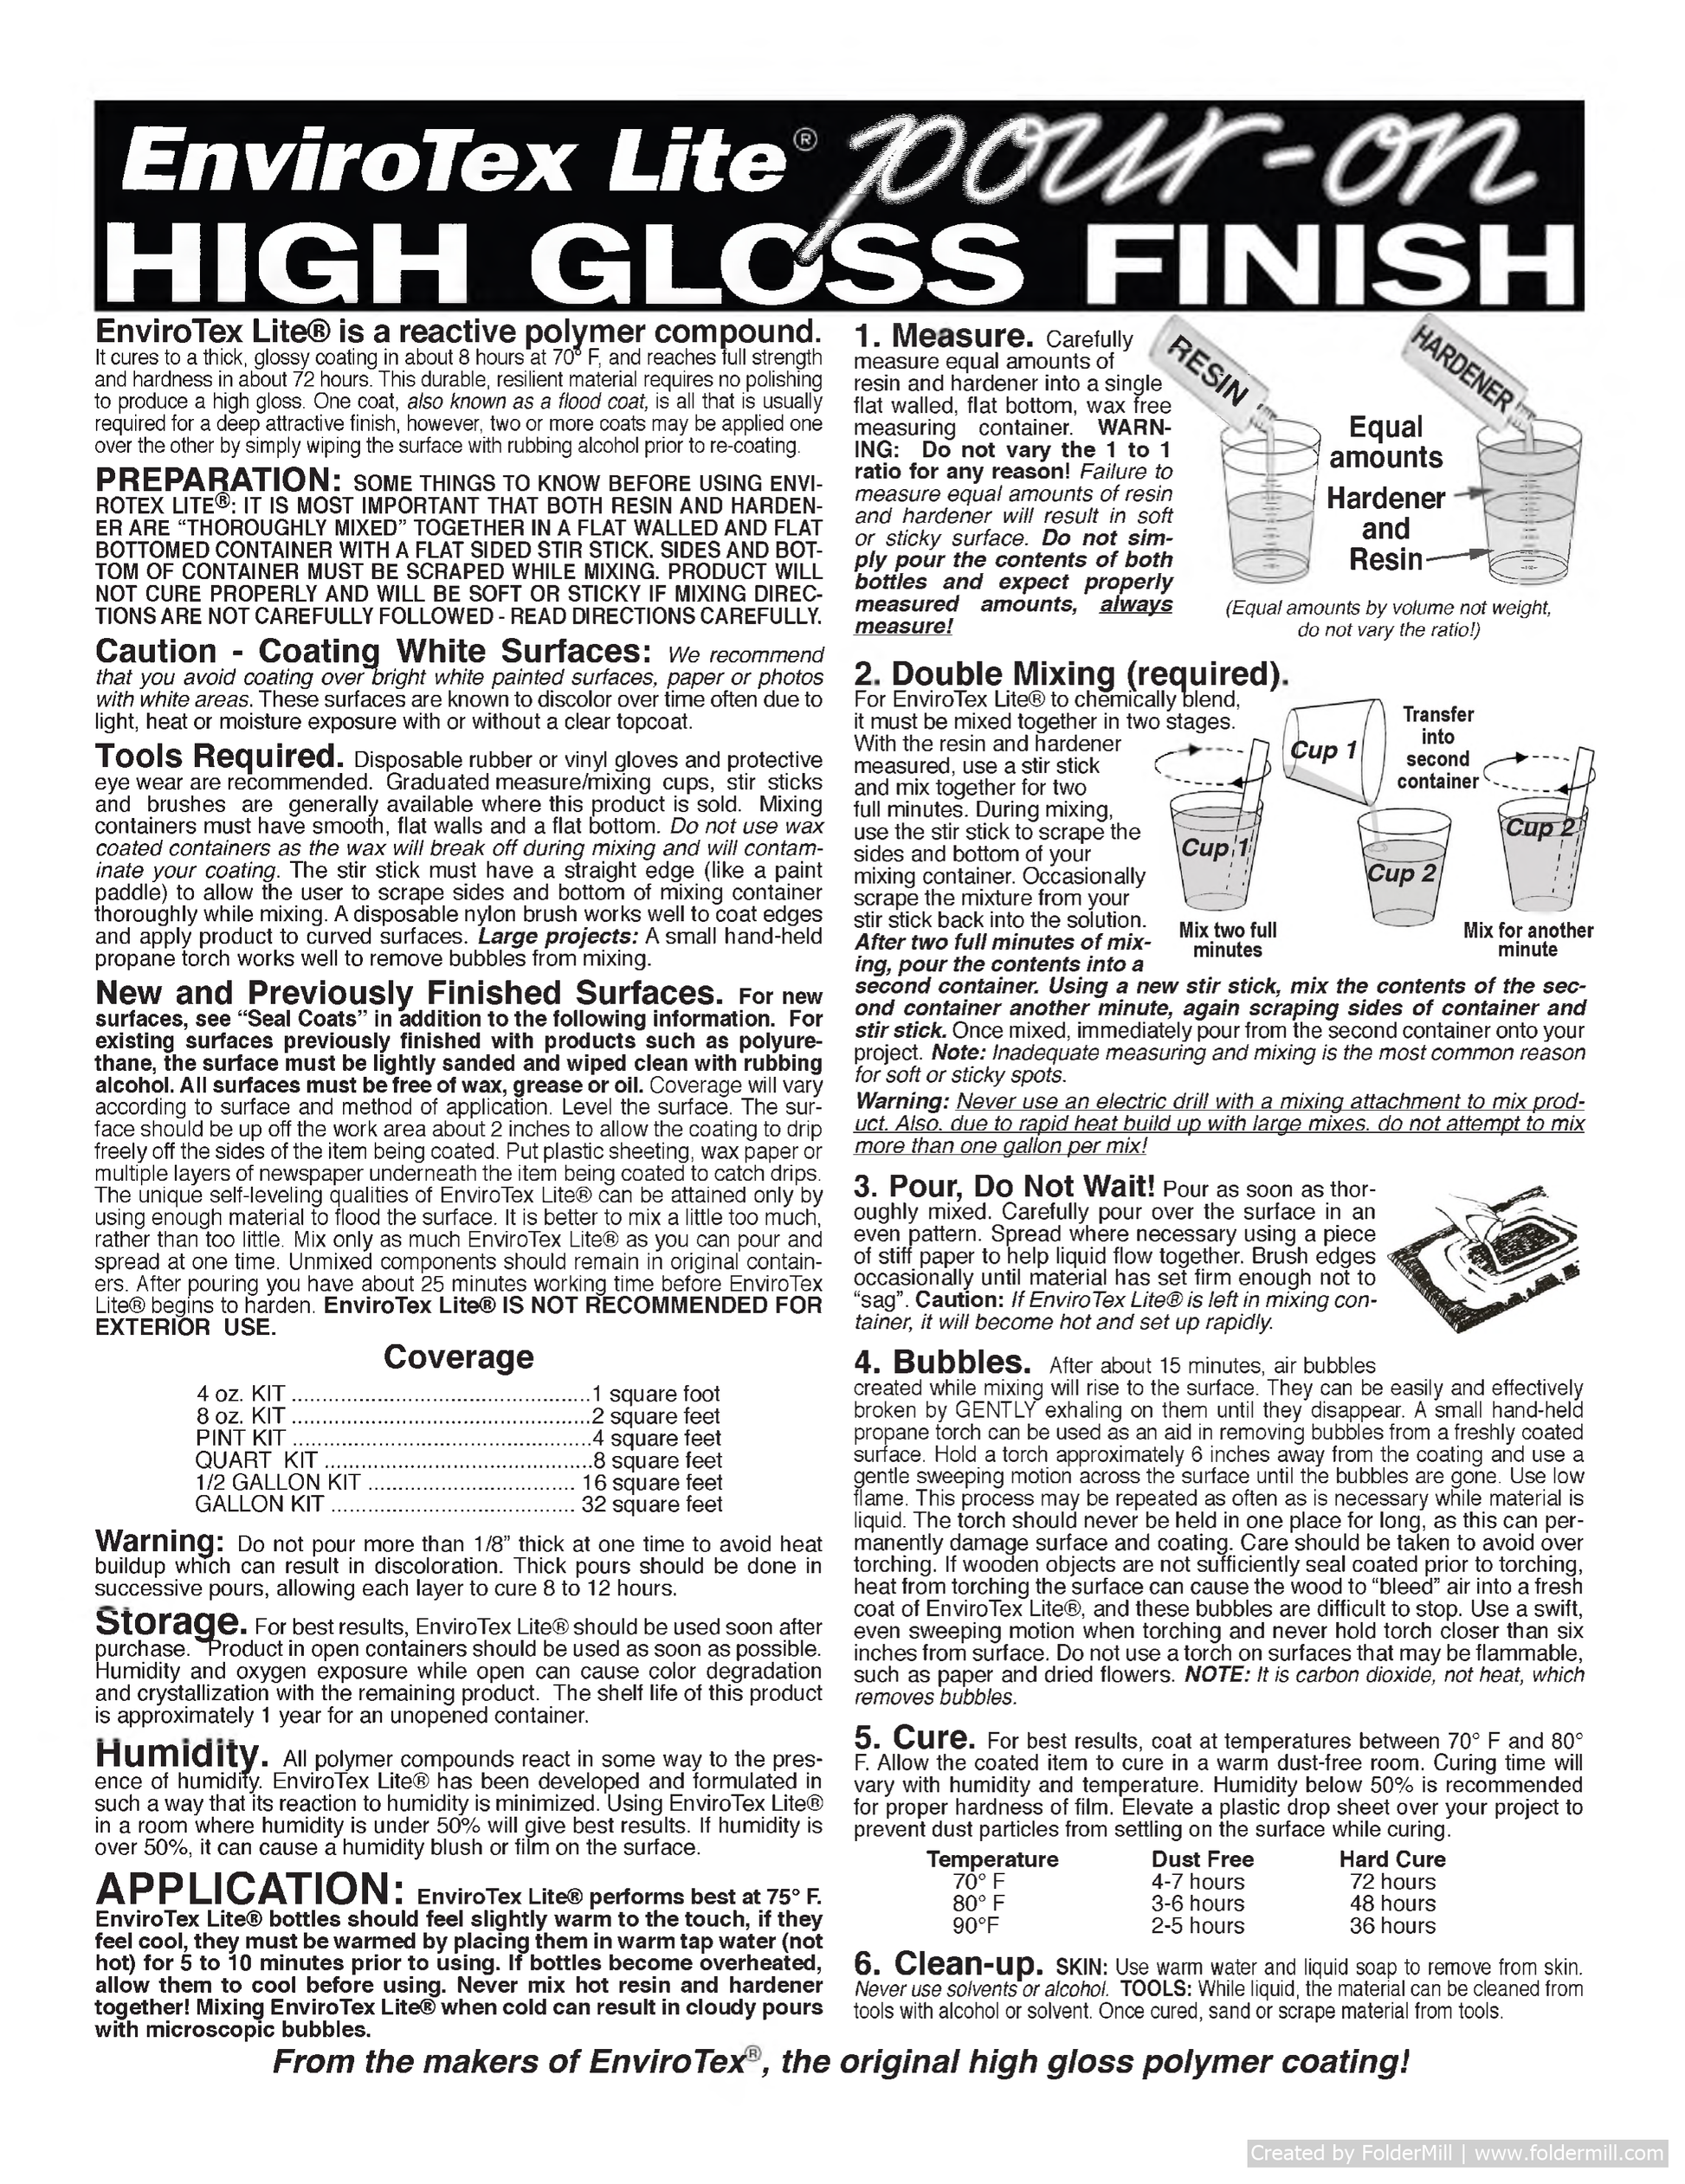 Environmental Technology ENVIROTEX LITE Pour-On High Gloss Finish 32 oz.  Kit for sale online